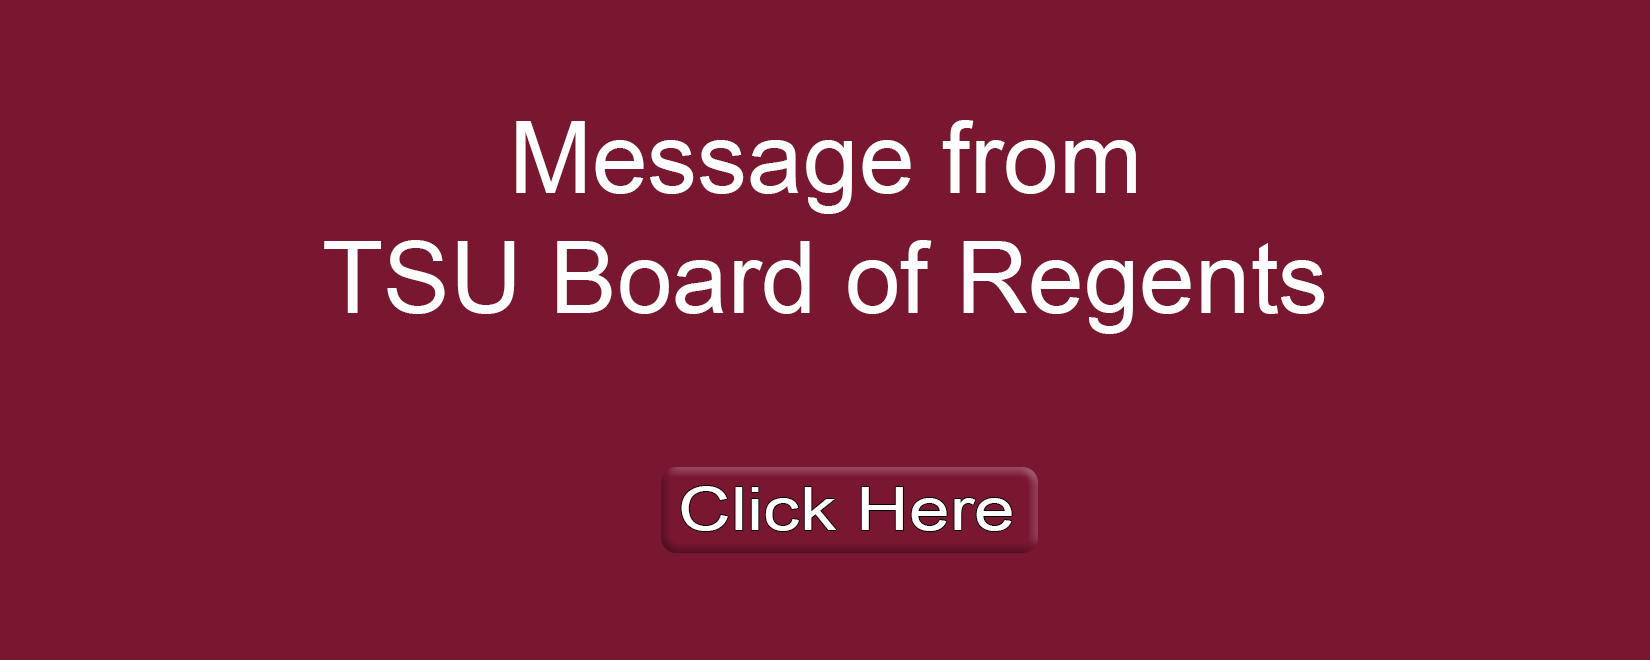 board of regents message banner